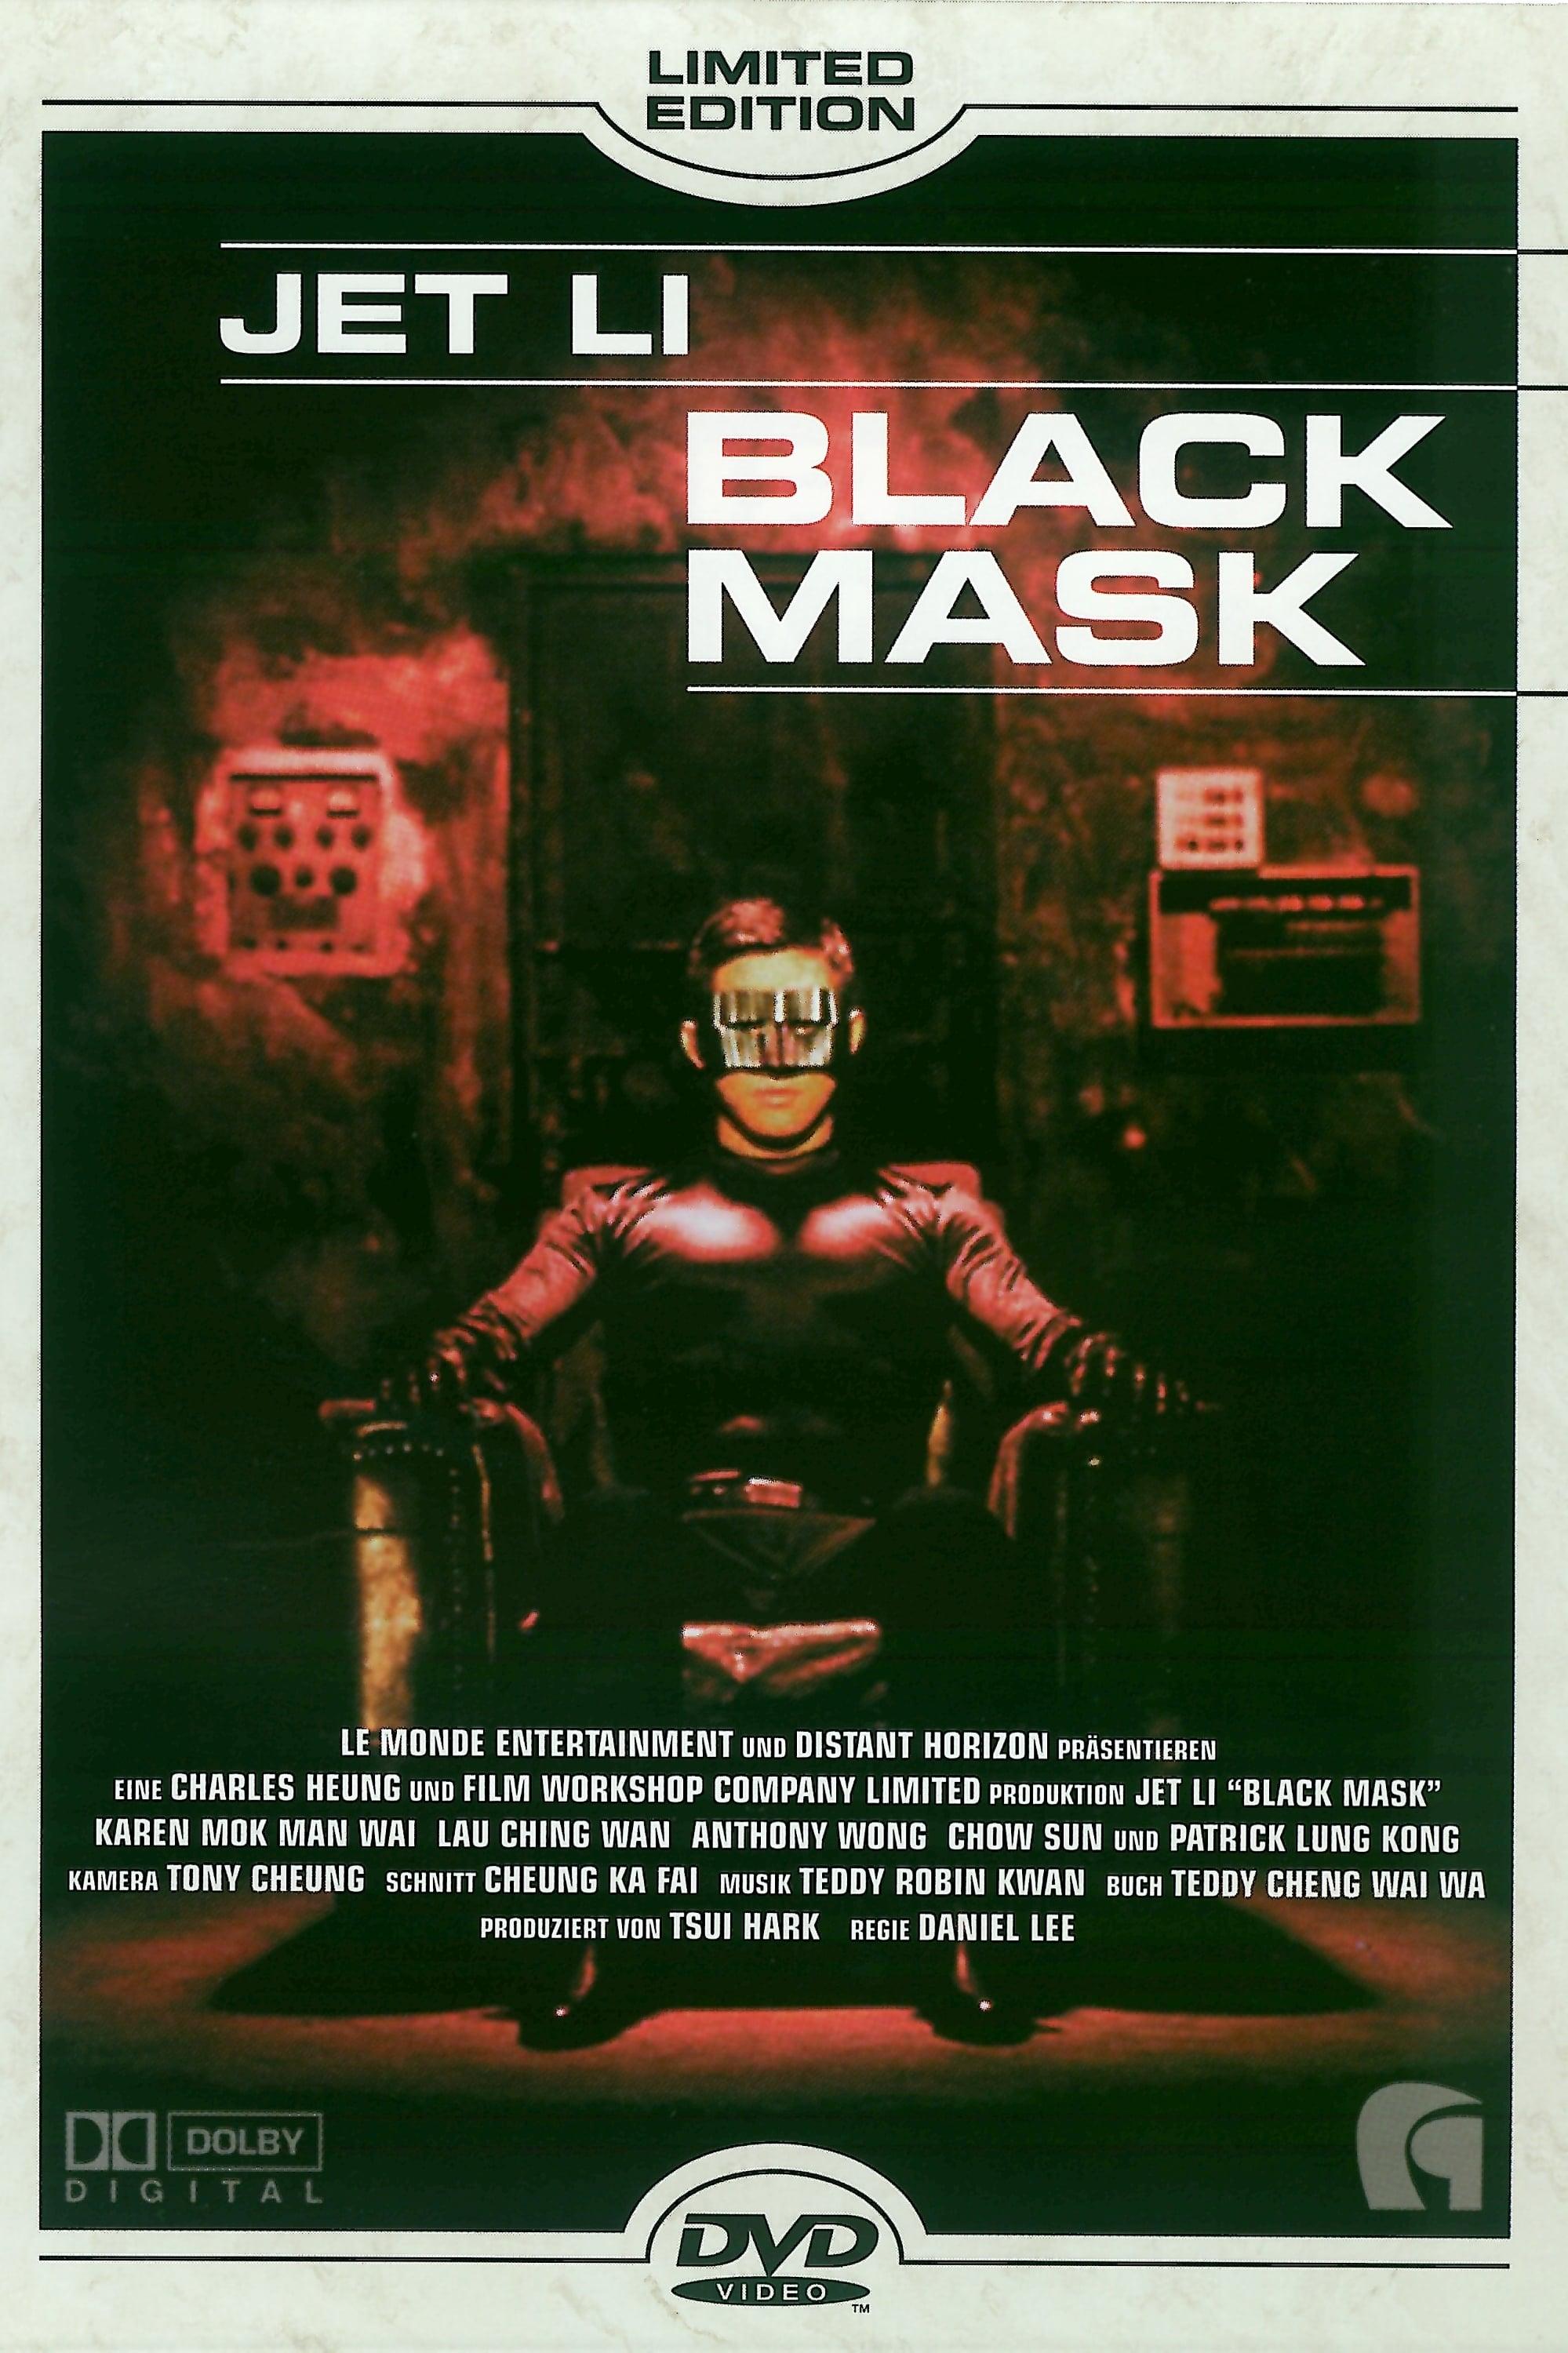 Black Mask poster